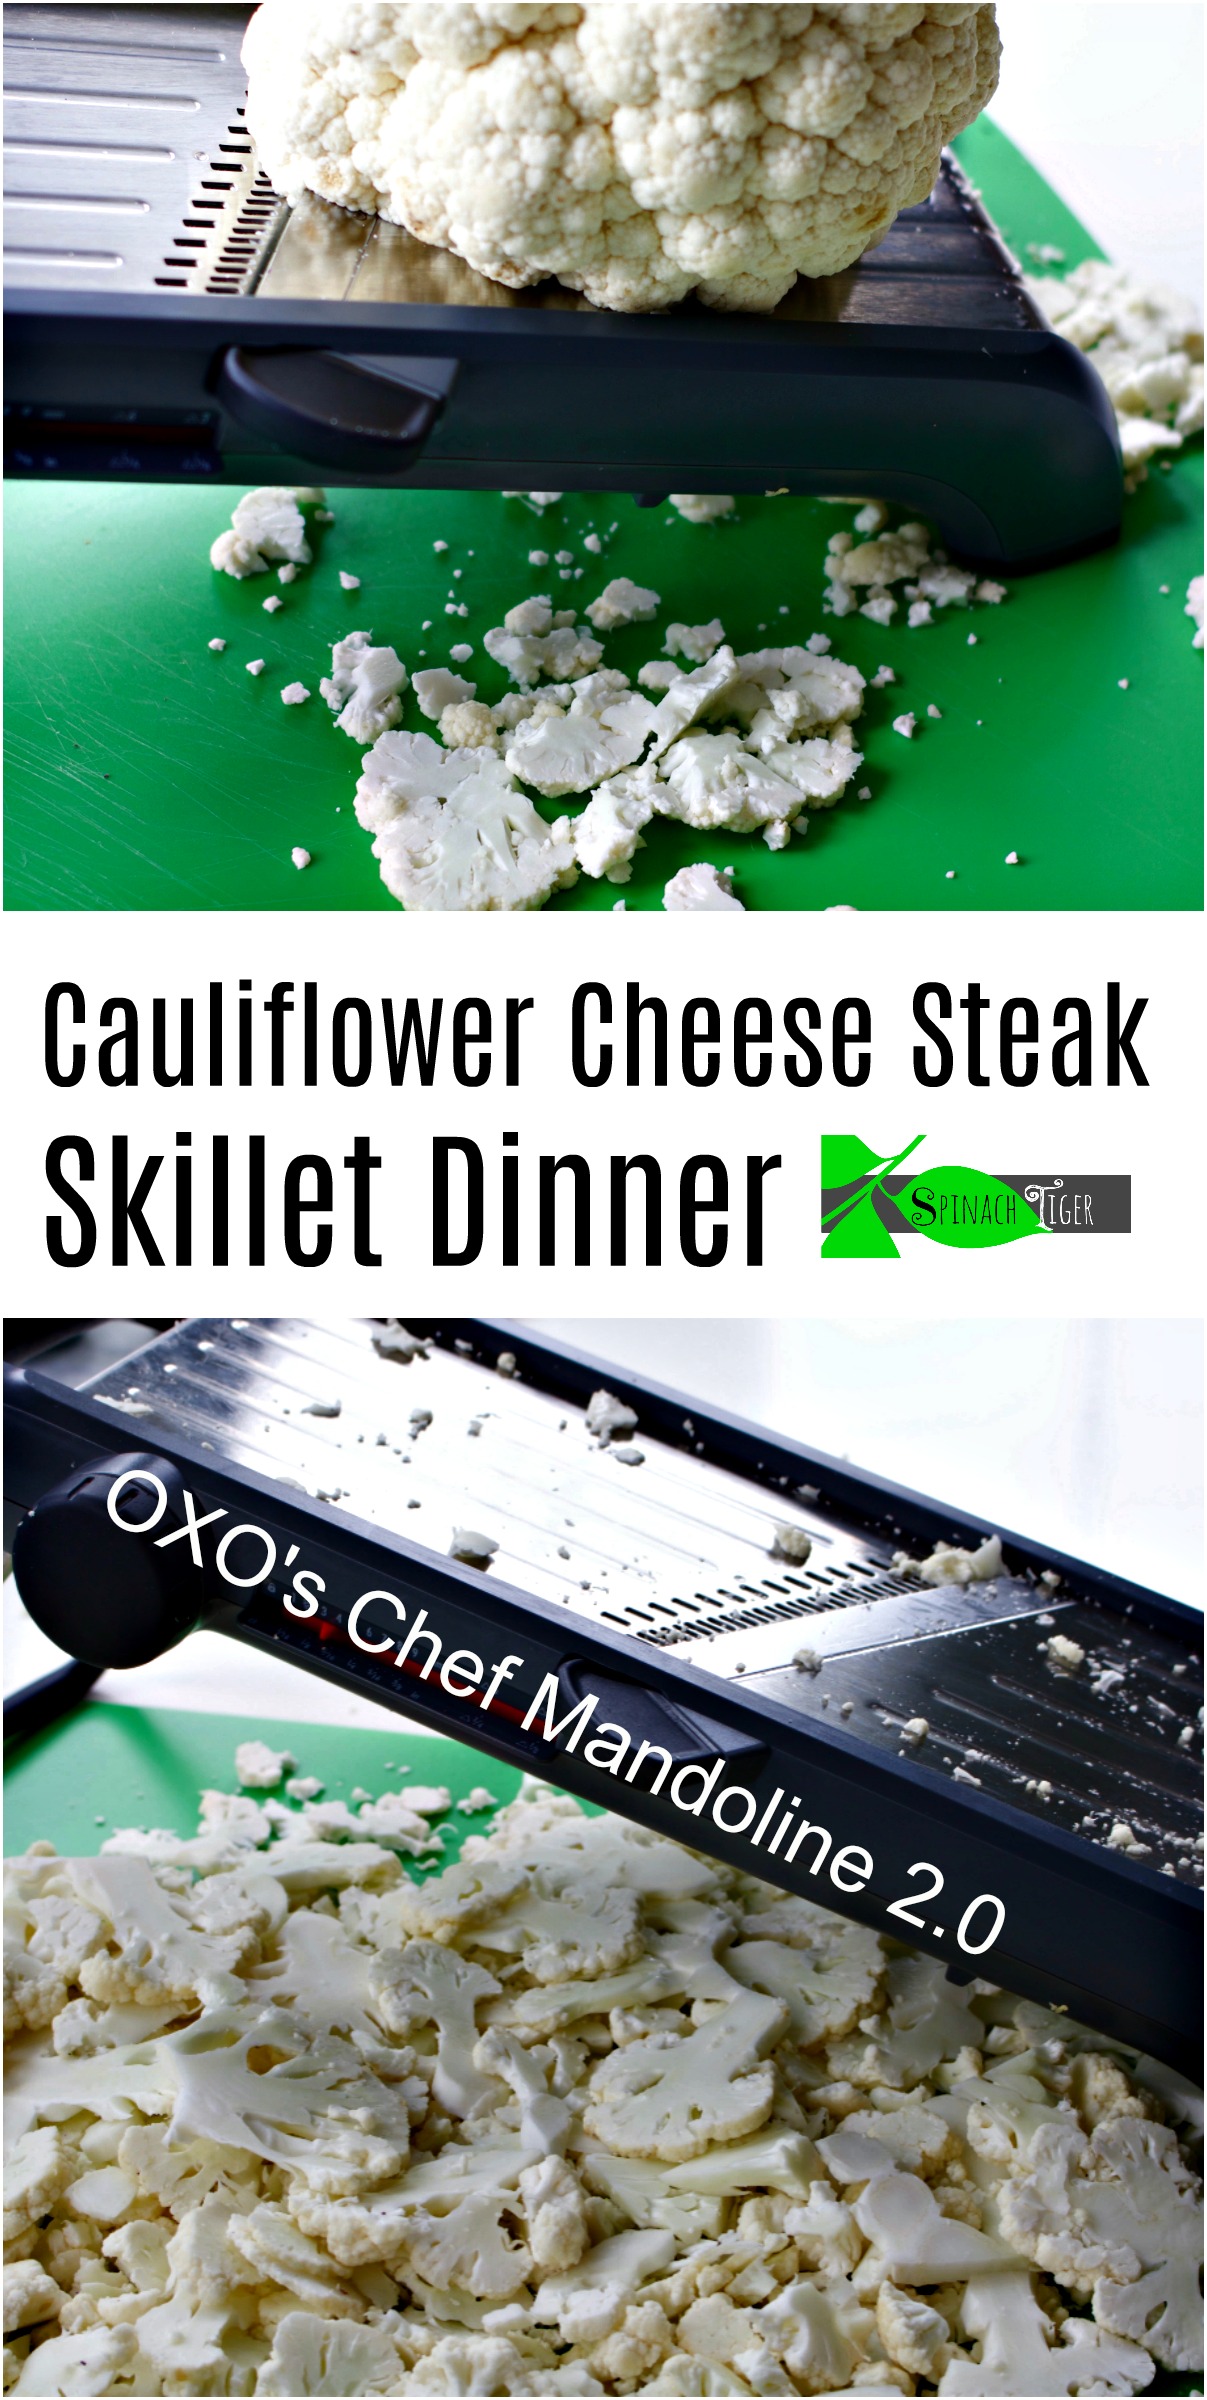 OXO Chef Mandoline 2.0 